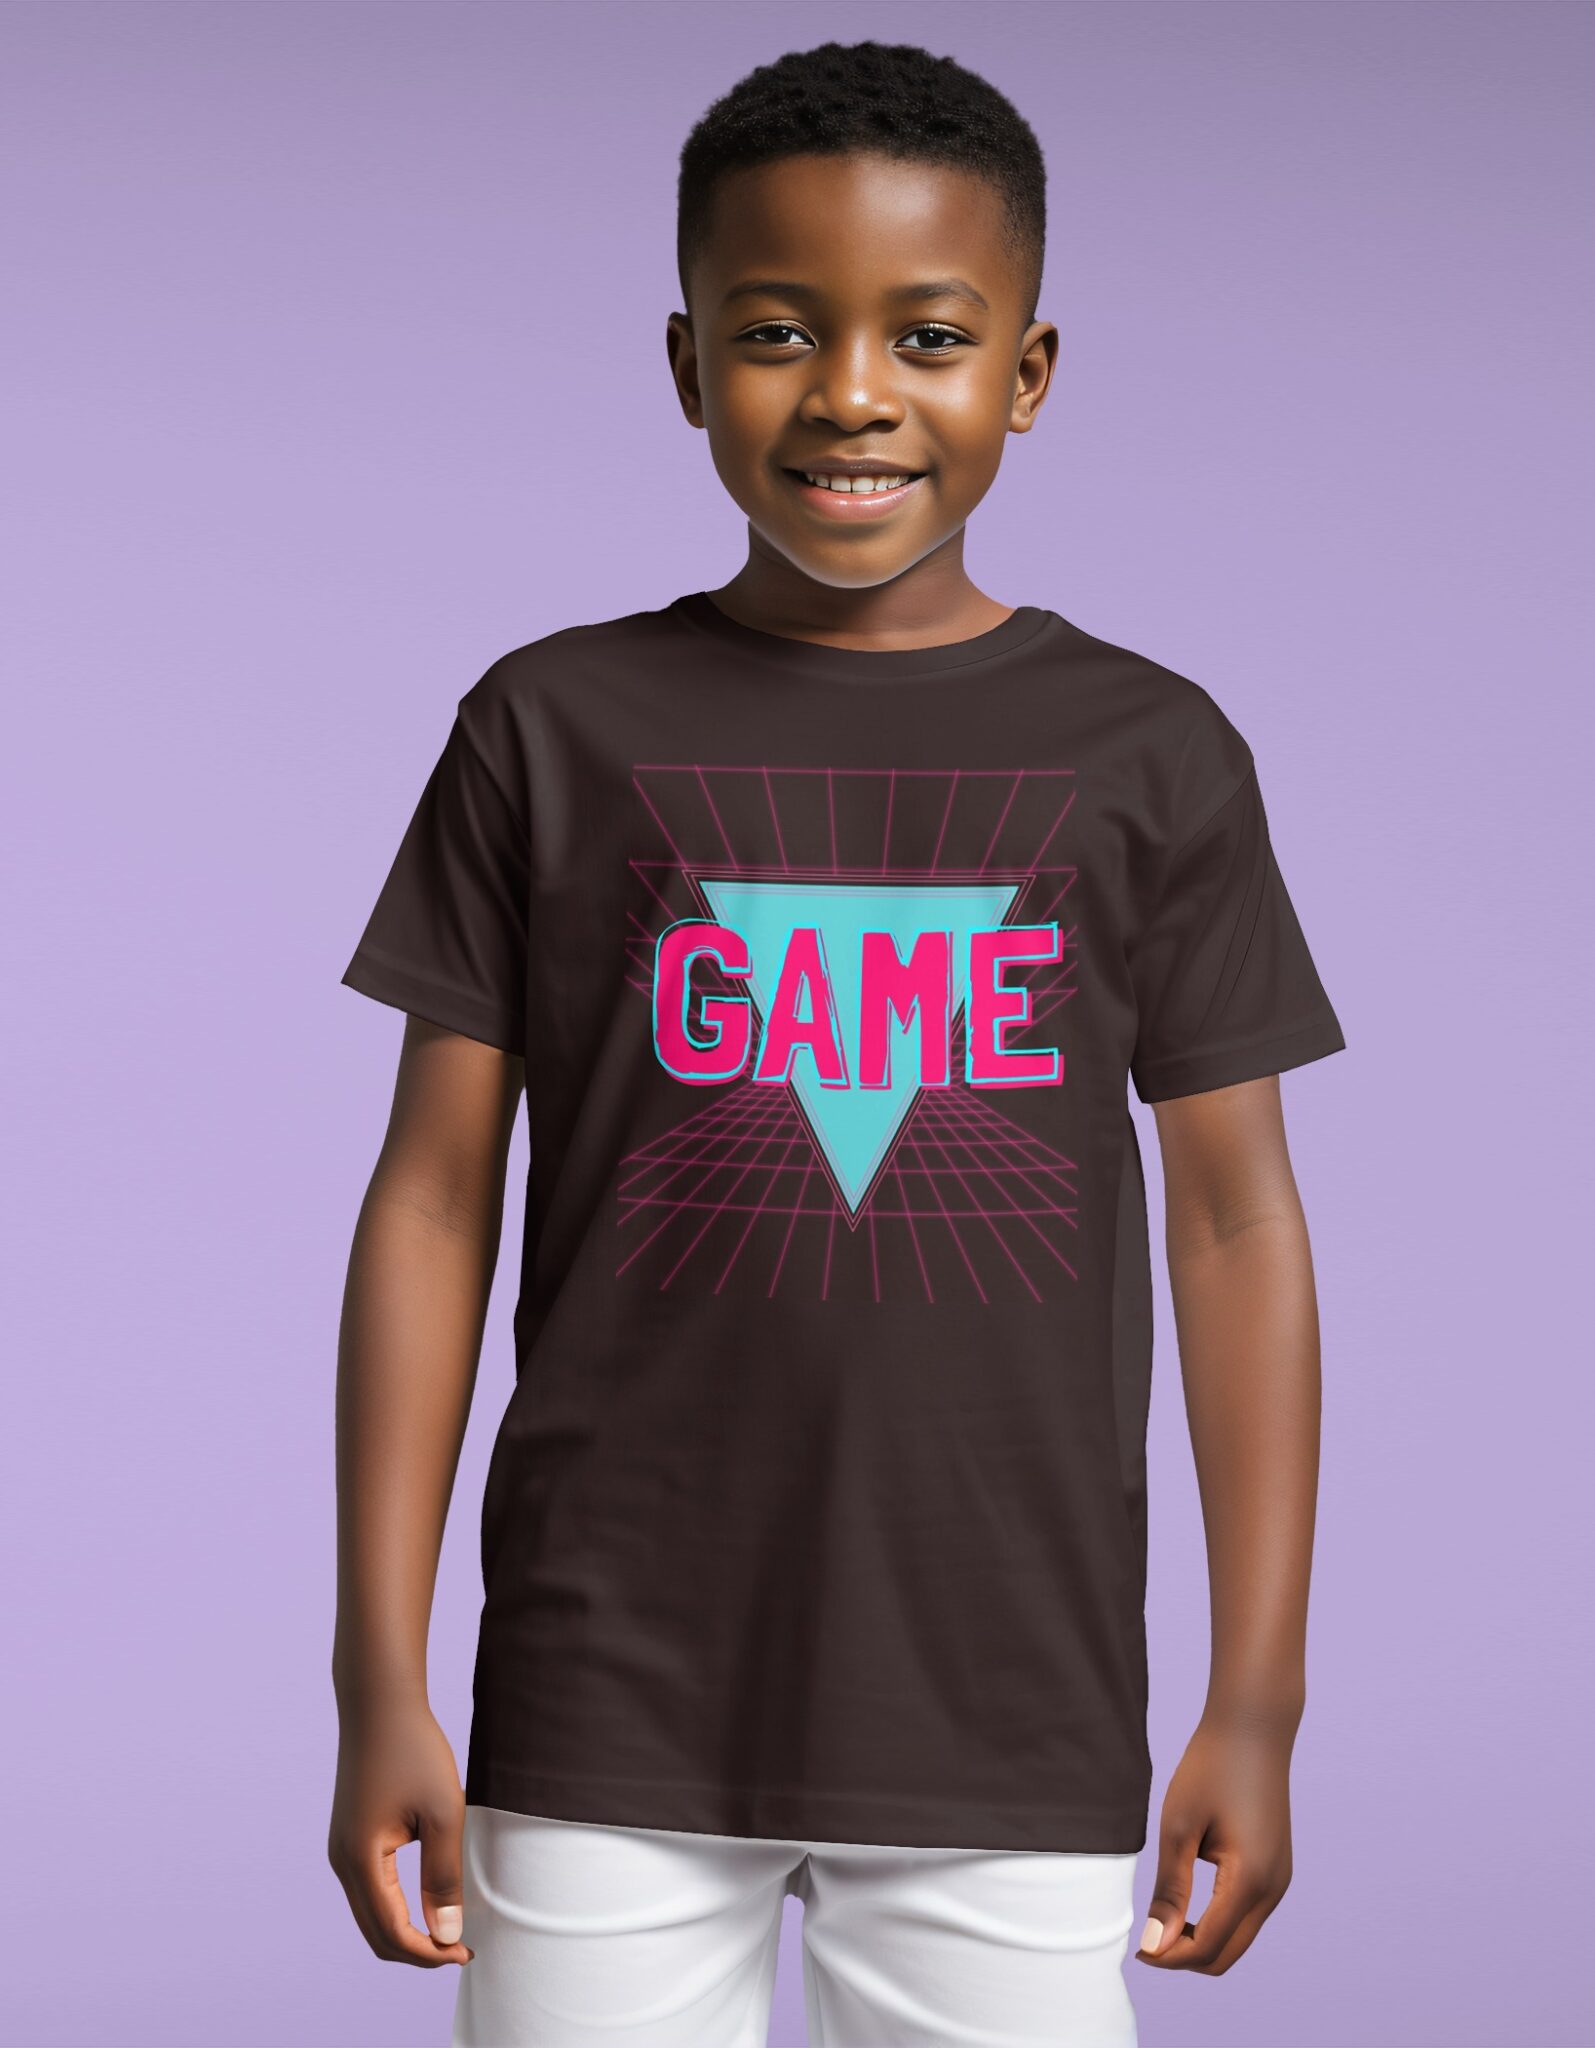 Games Design on Kid's Round Collar T-Shirt Mockup | Mediamodifier